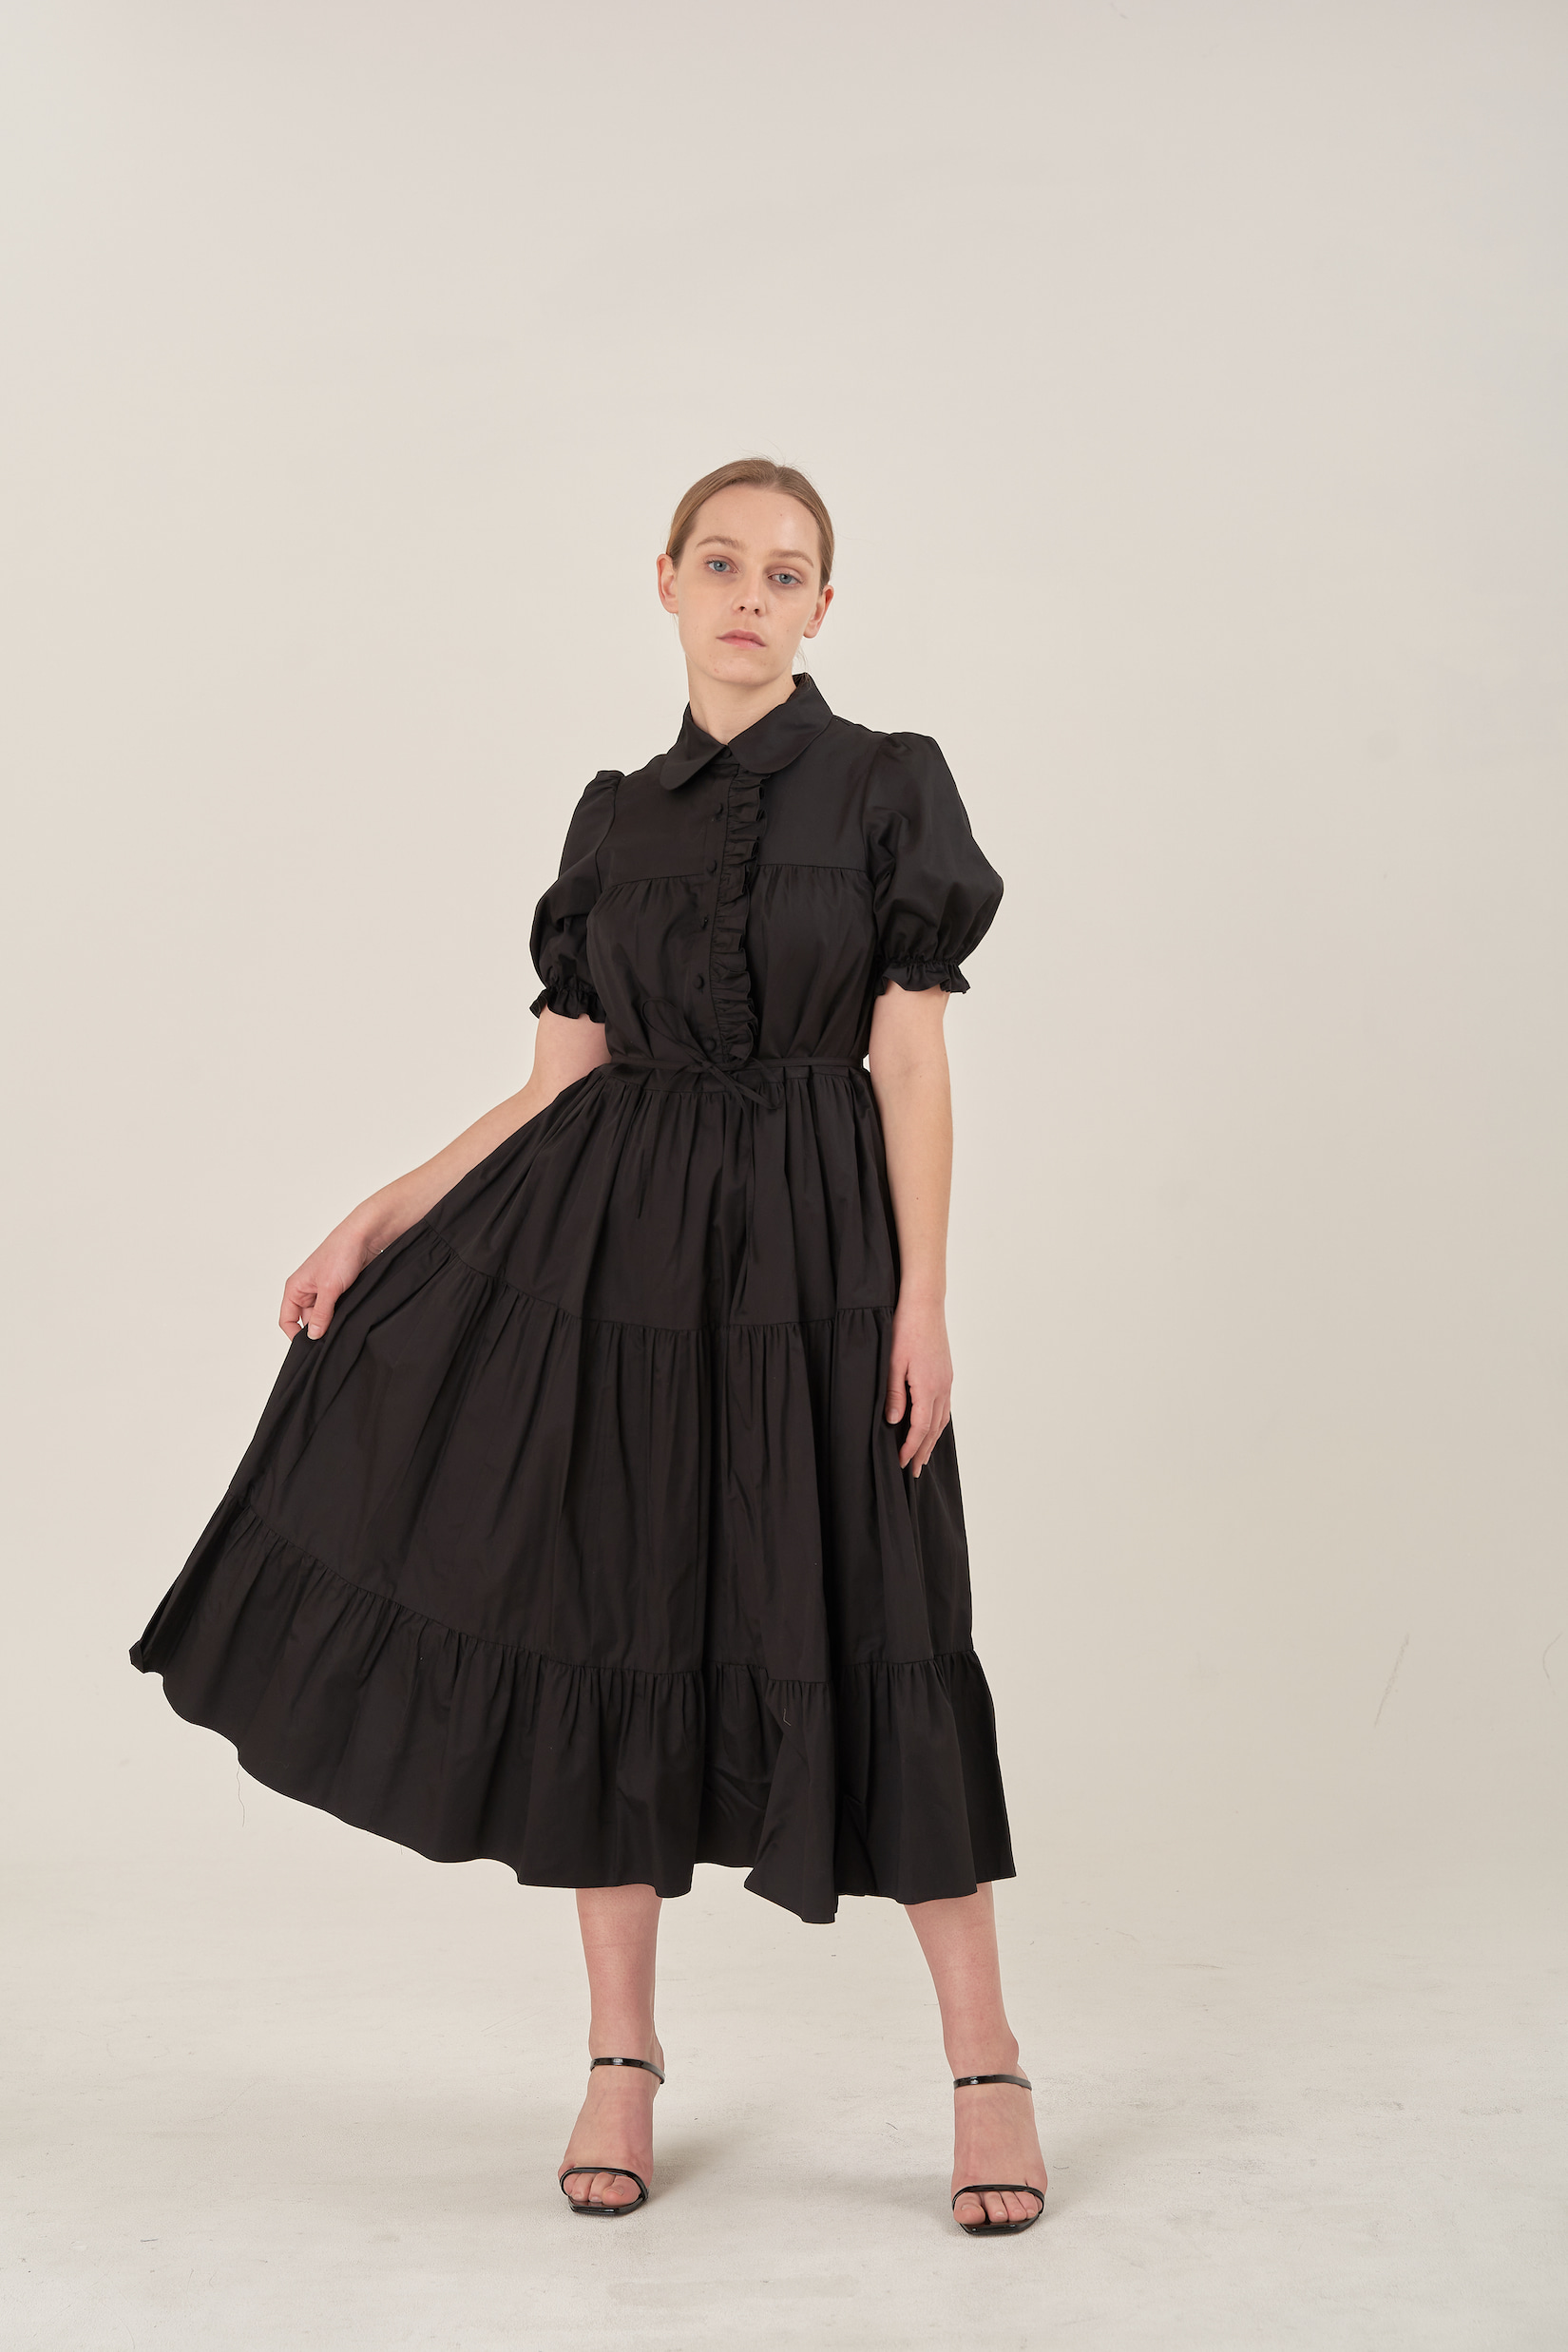 Plaisir  Dress (long, black)